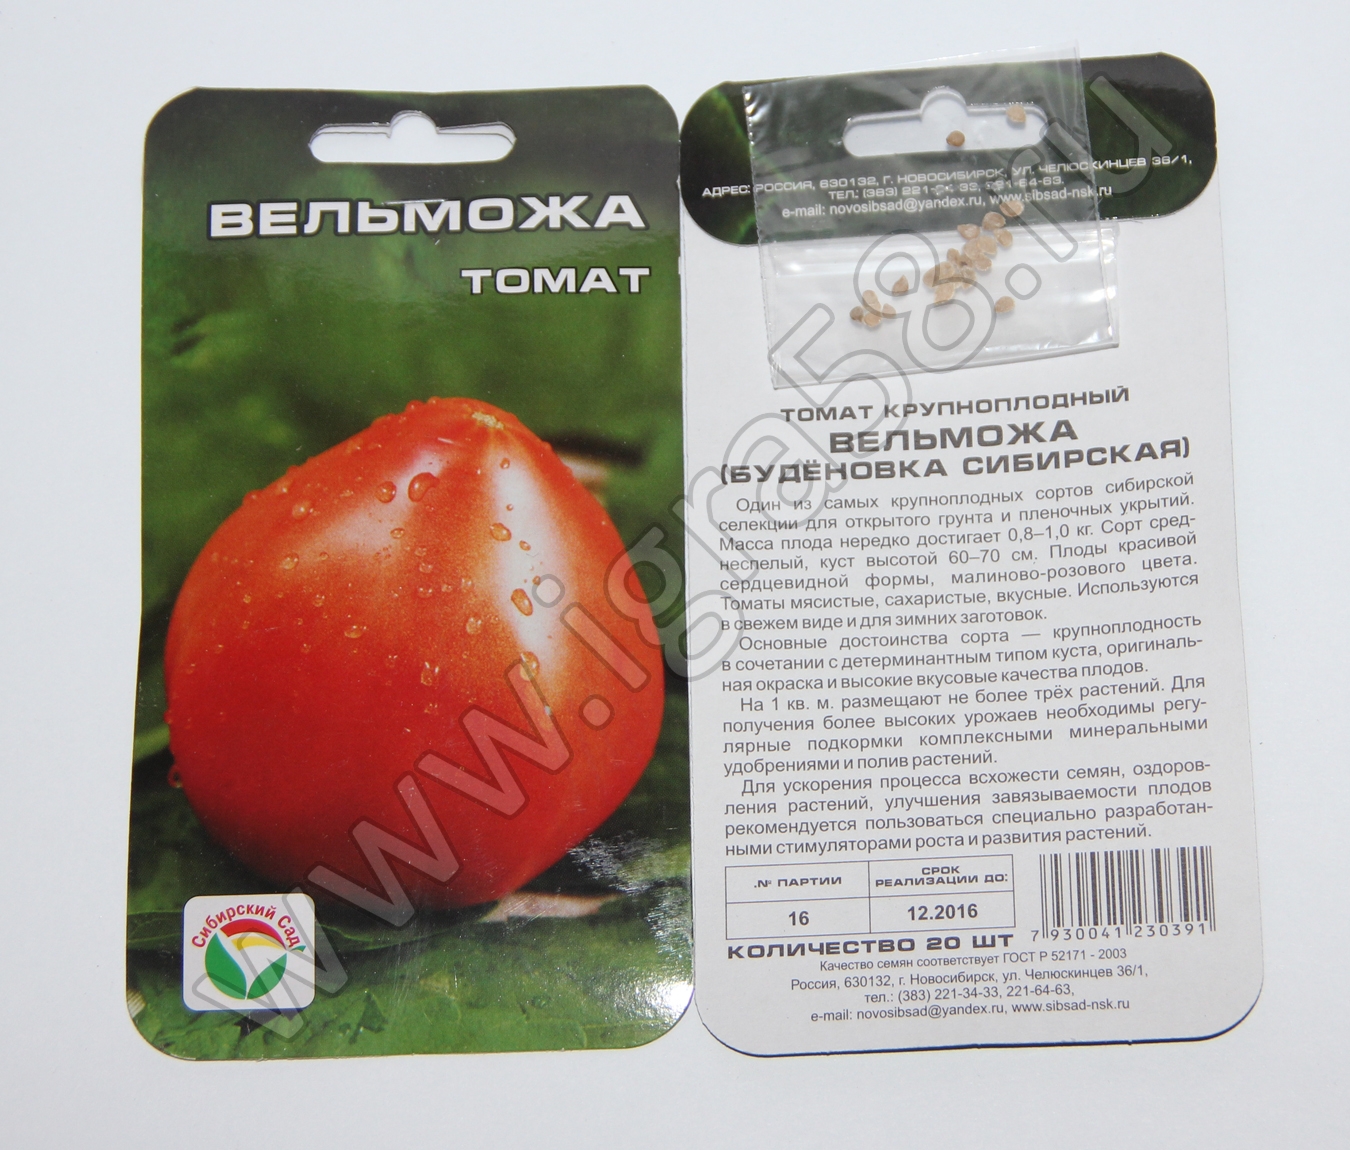 Описание и характеристика сорта помидоров буденовка